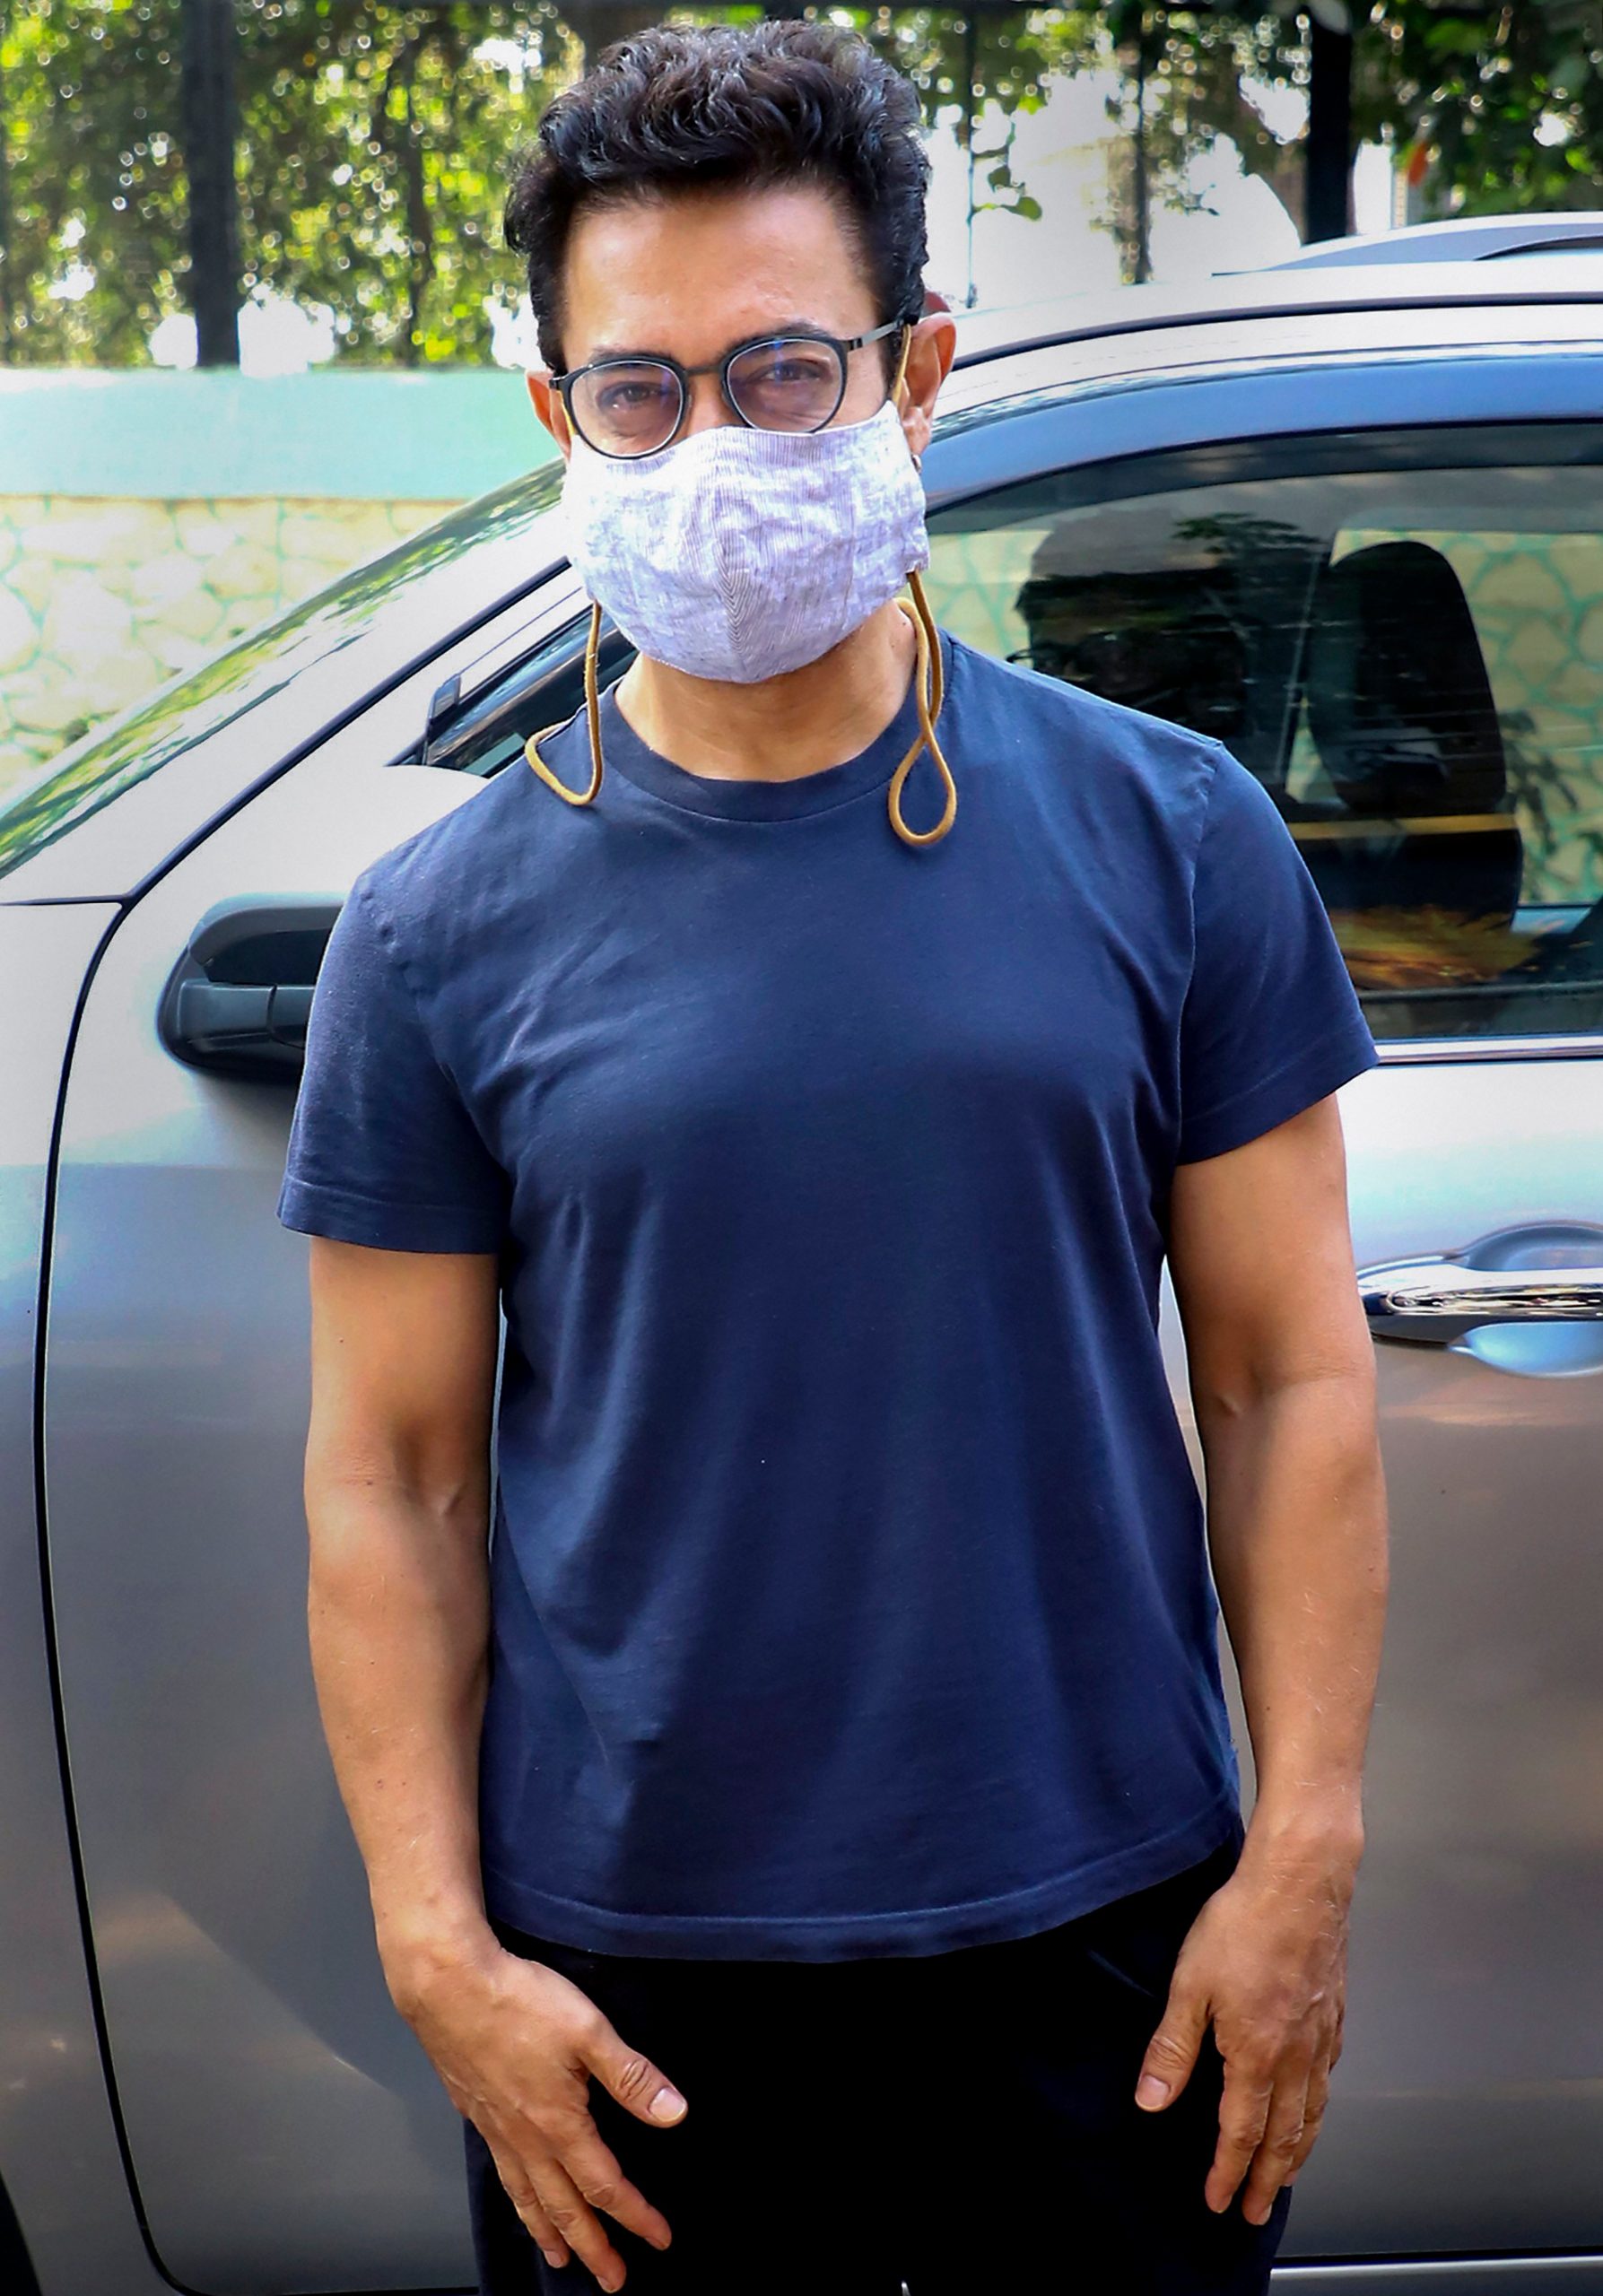 Actor Aamir Khan tests postive for COVID-19: Spokesperson